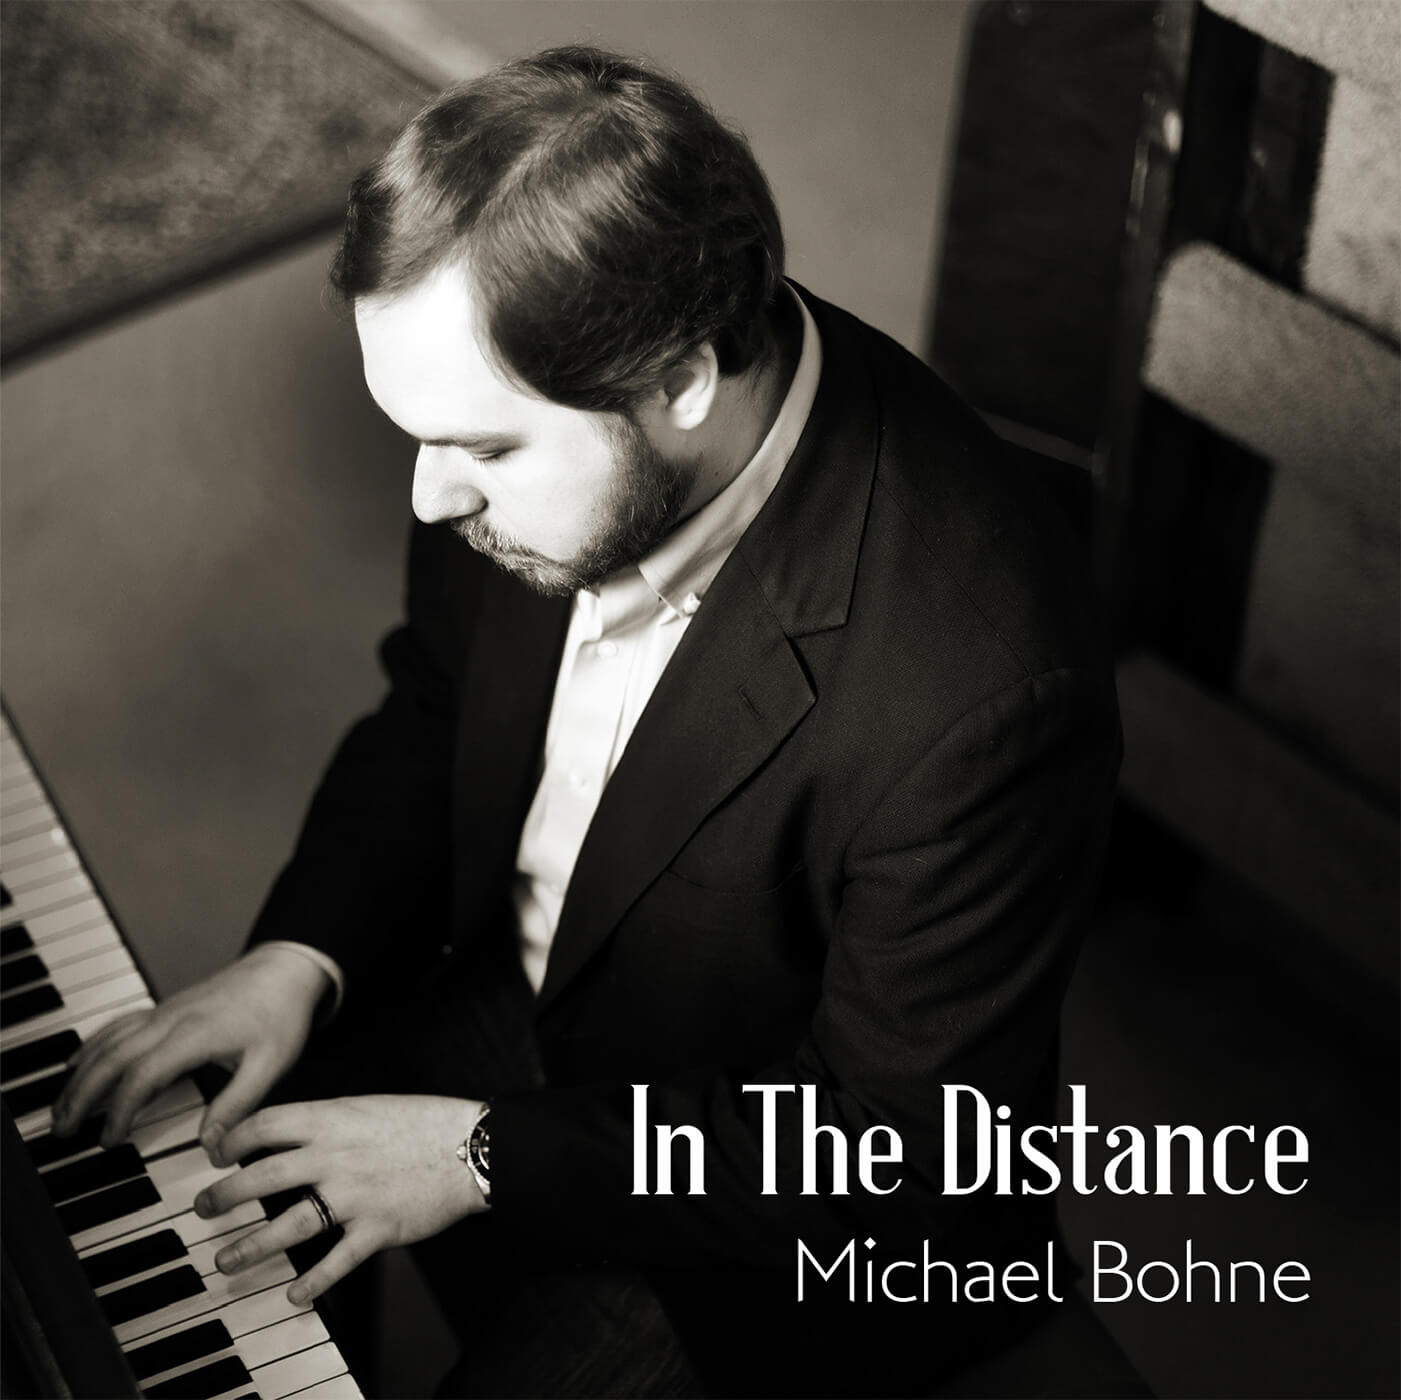 Engaging solo piano debut Michael Bohne